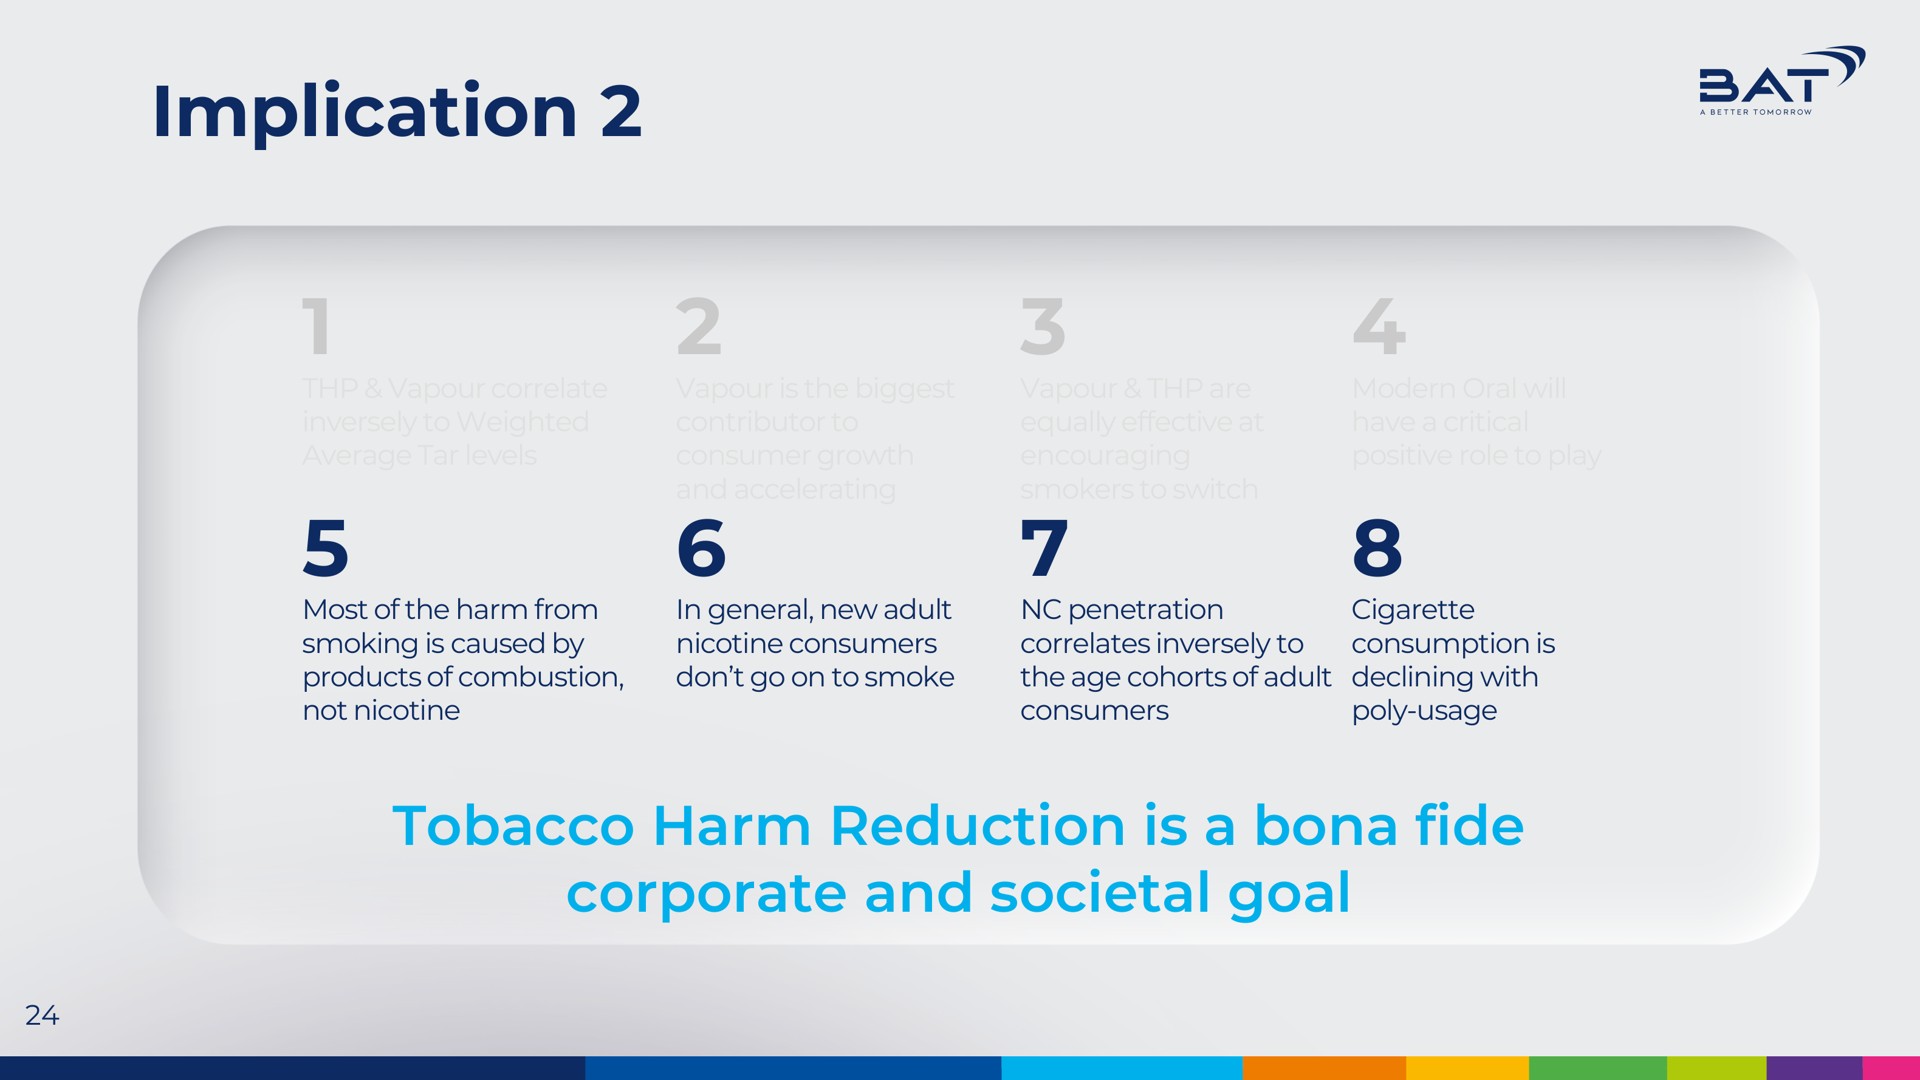 implication sai tobacco harm reduction is a fide corporate and societal goal | BAT